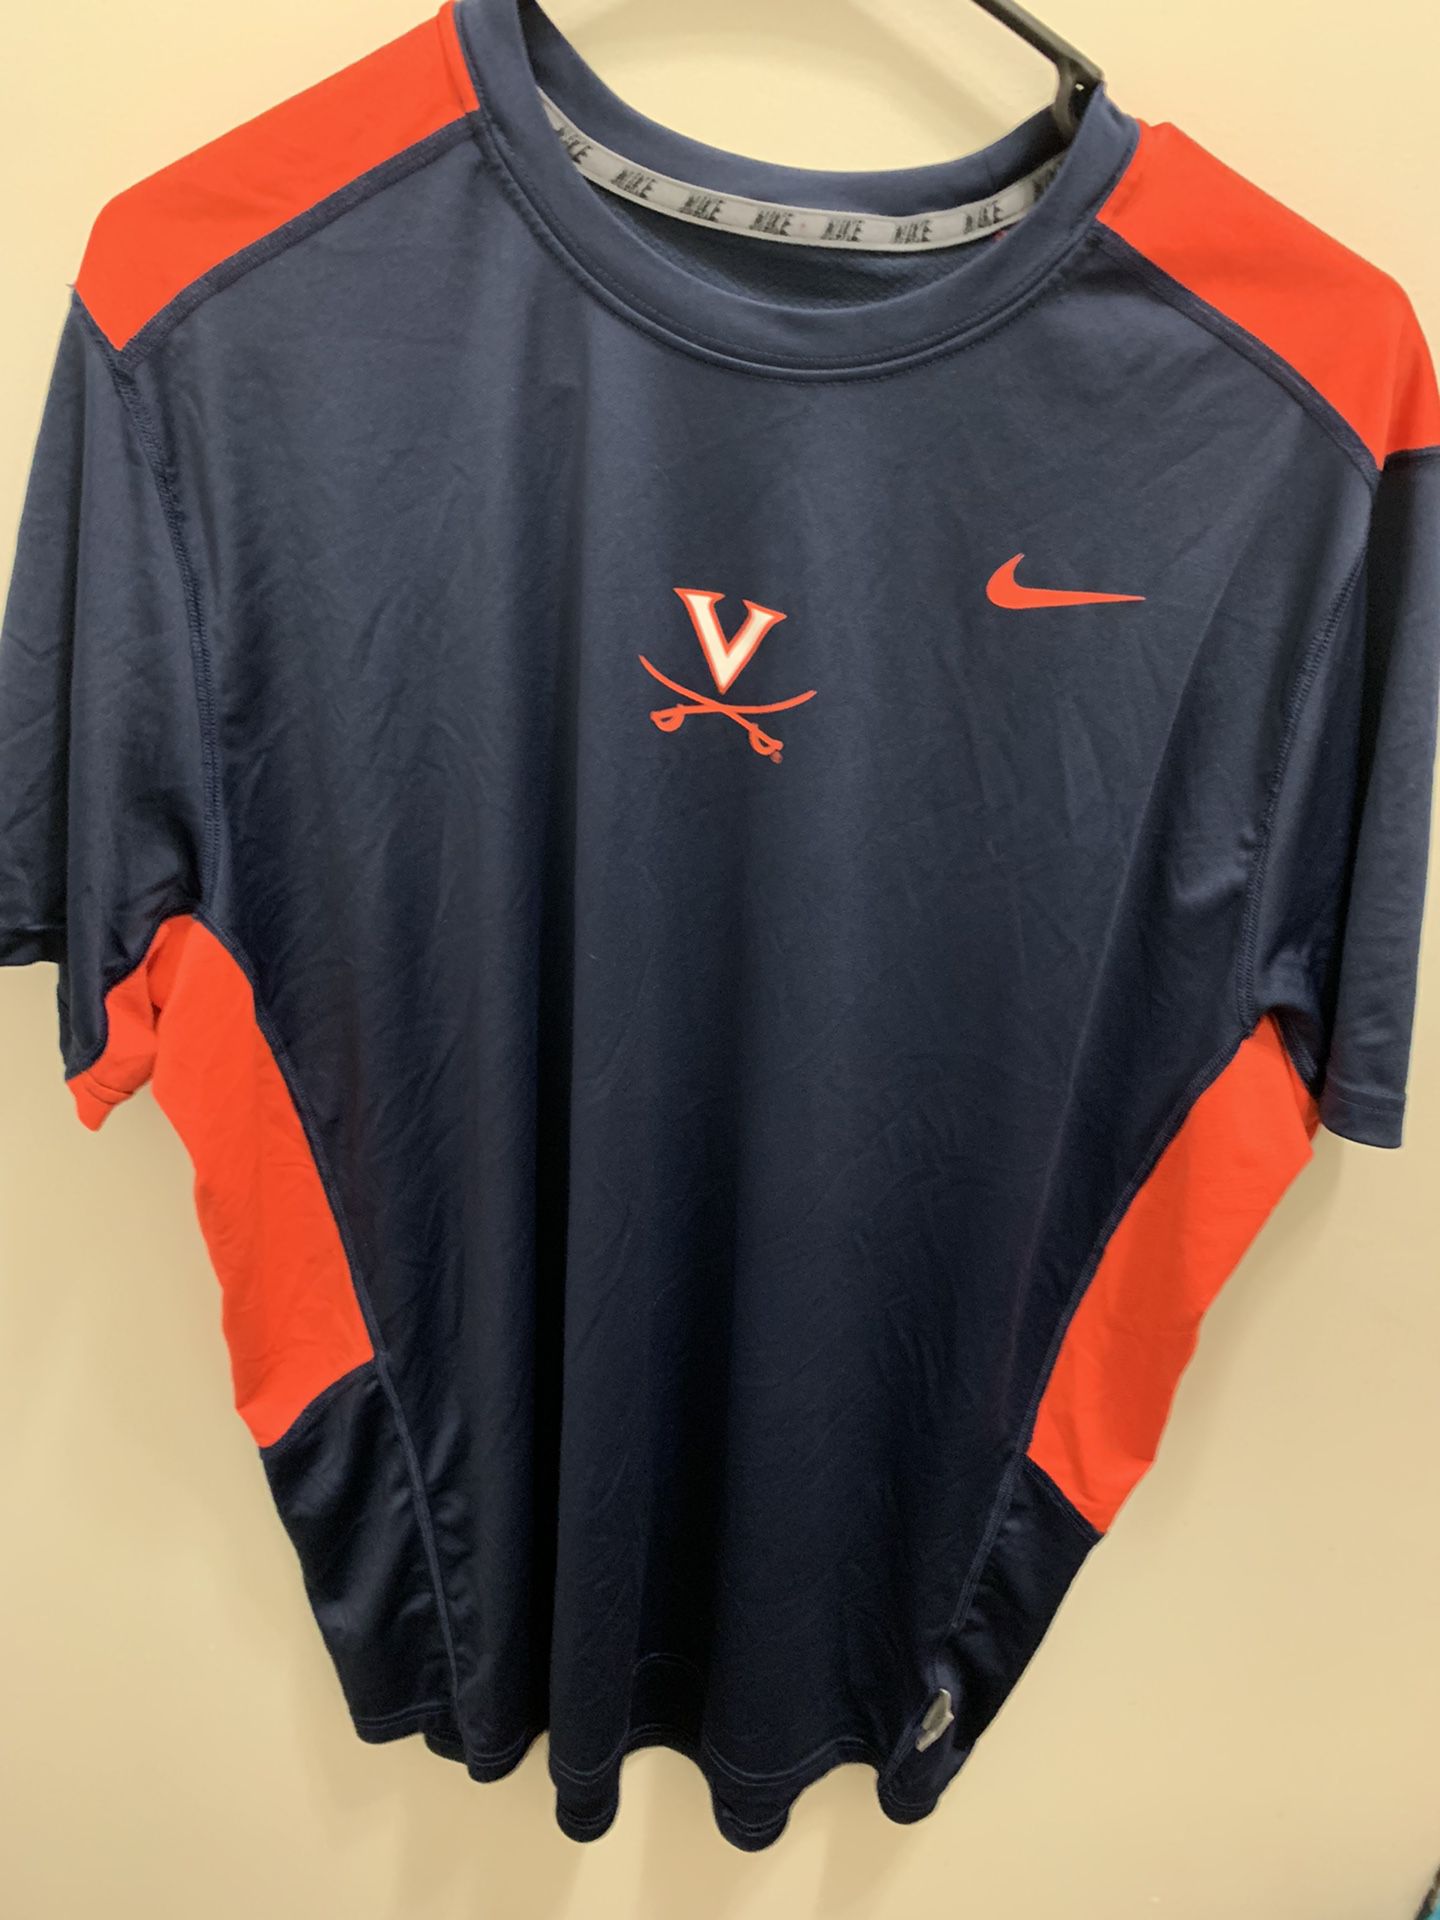 University of Virginia Cavaliers Nike Dri Fit Shirt Size Large 